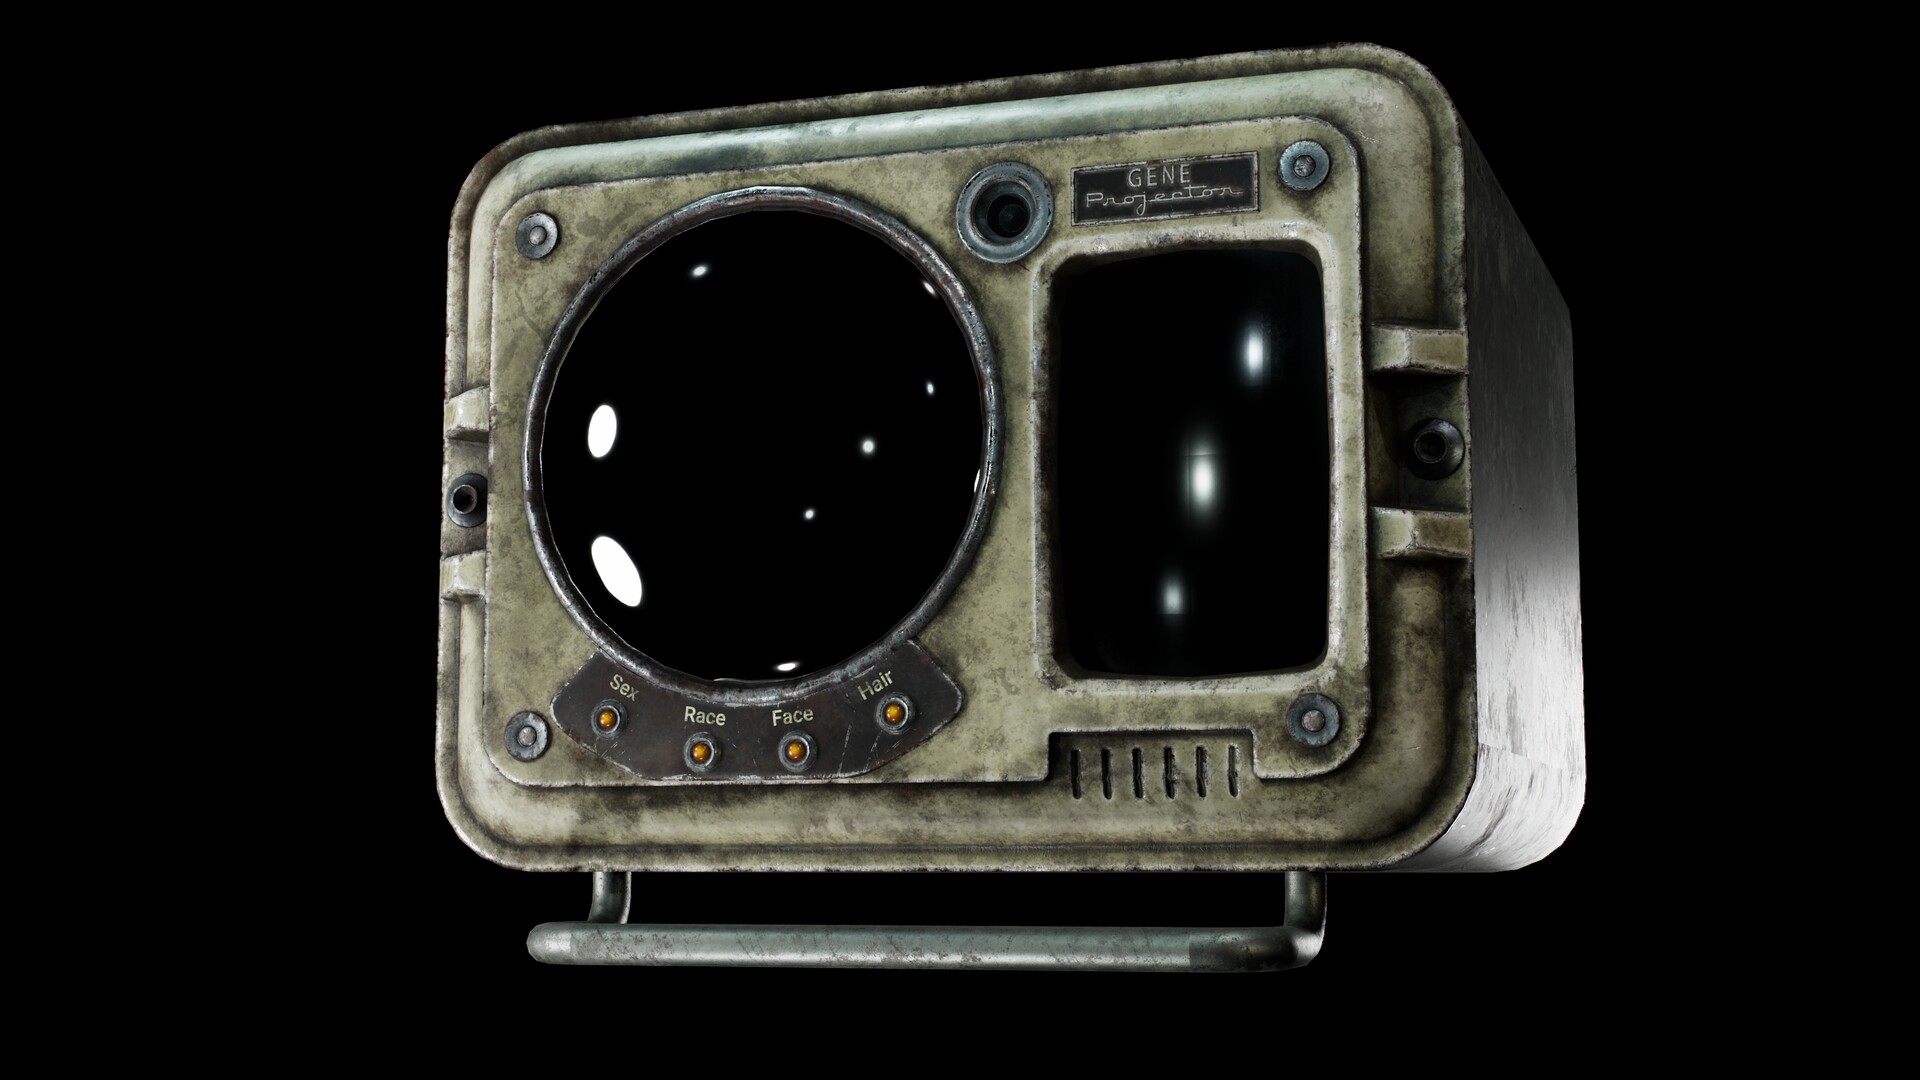 ArtStation - Fallout 3 - Recon Armour Remake